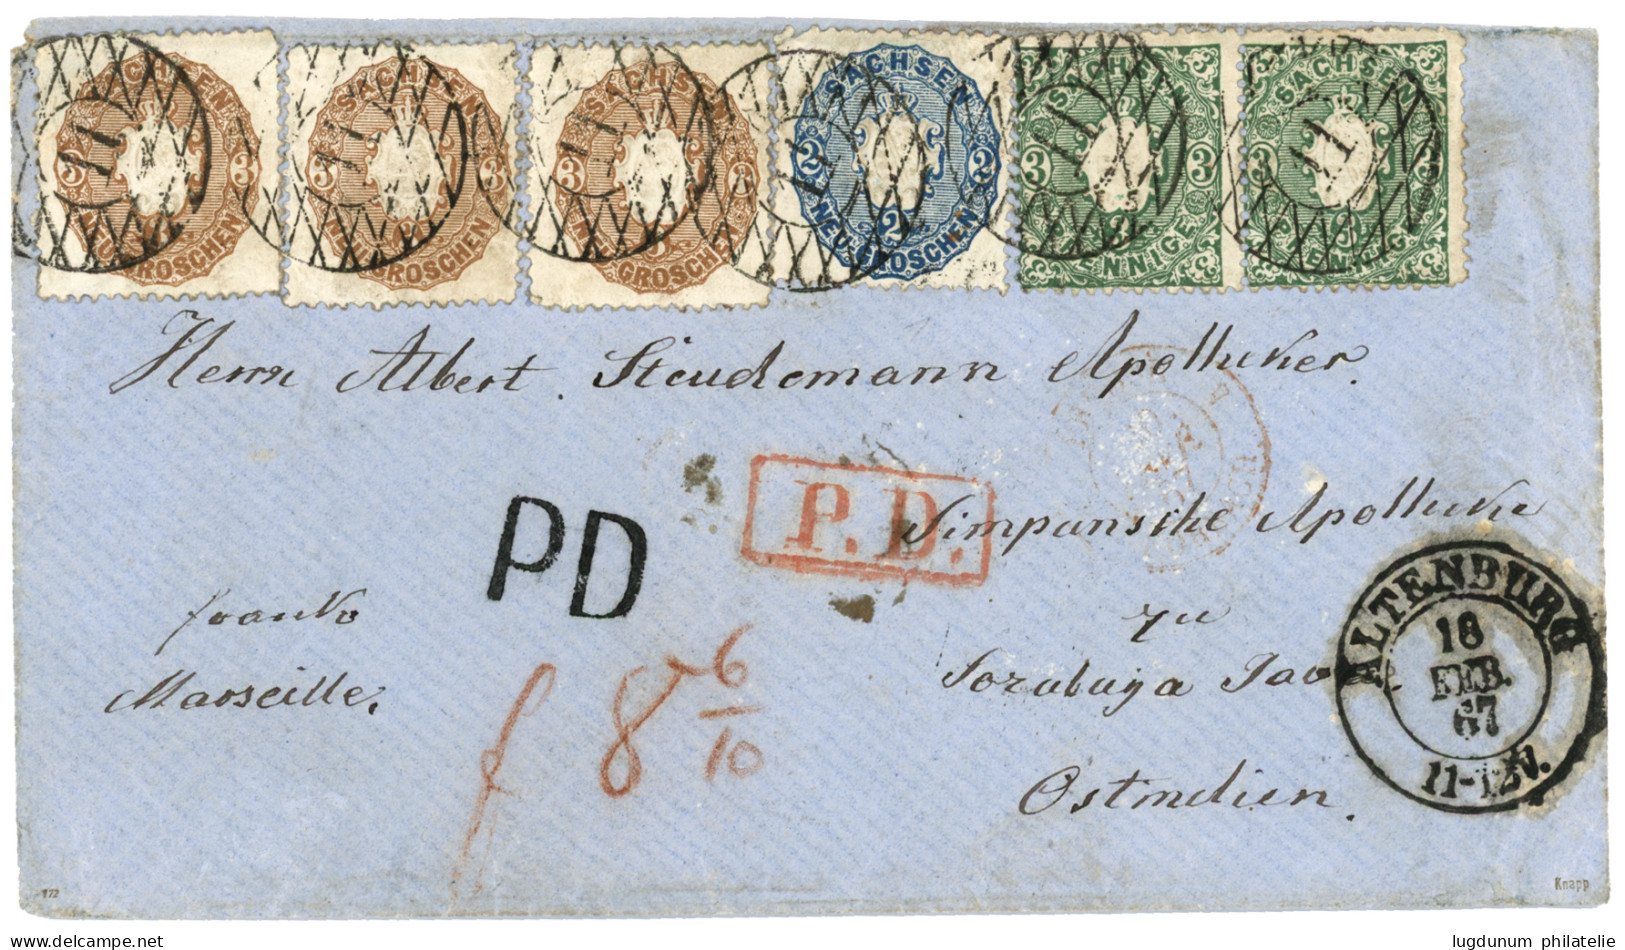 SAXONY - Destination NETHERLAND INDIES : 1867 2 Ngr + 3 Ngr (x3) + Pair 3pfg Canc. 11 + ALTENBURG On Envelope To SORABAY - Saxony